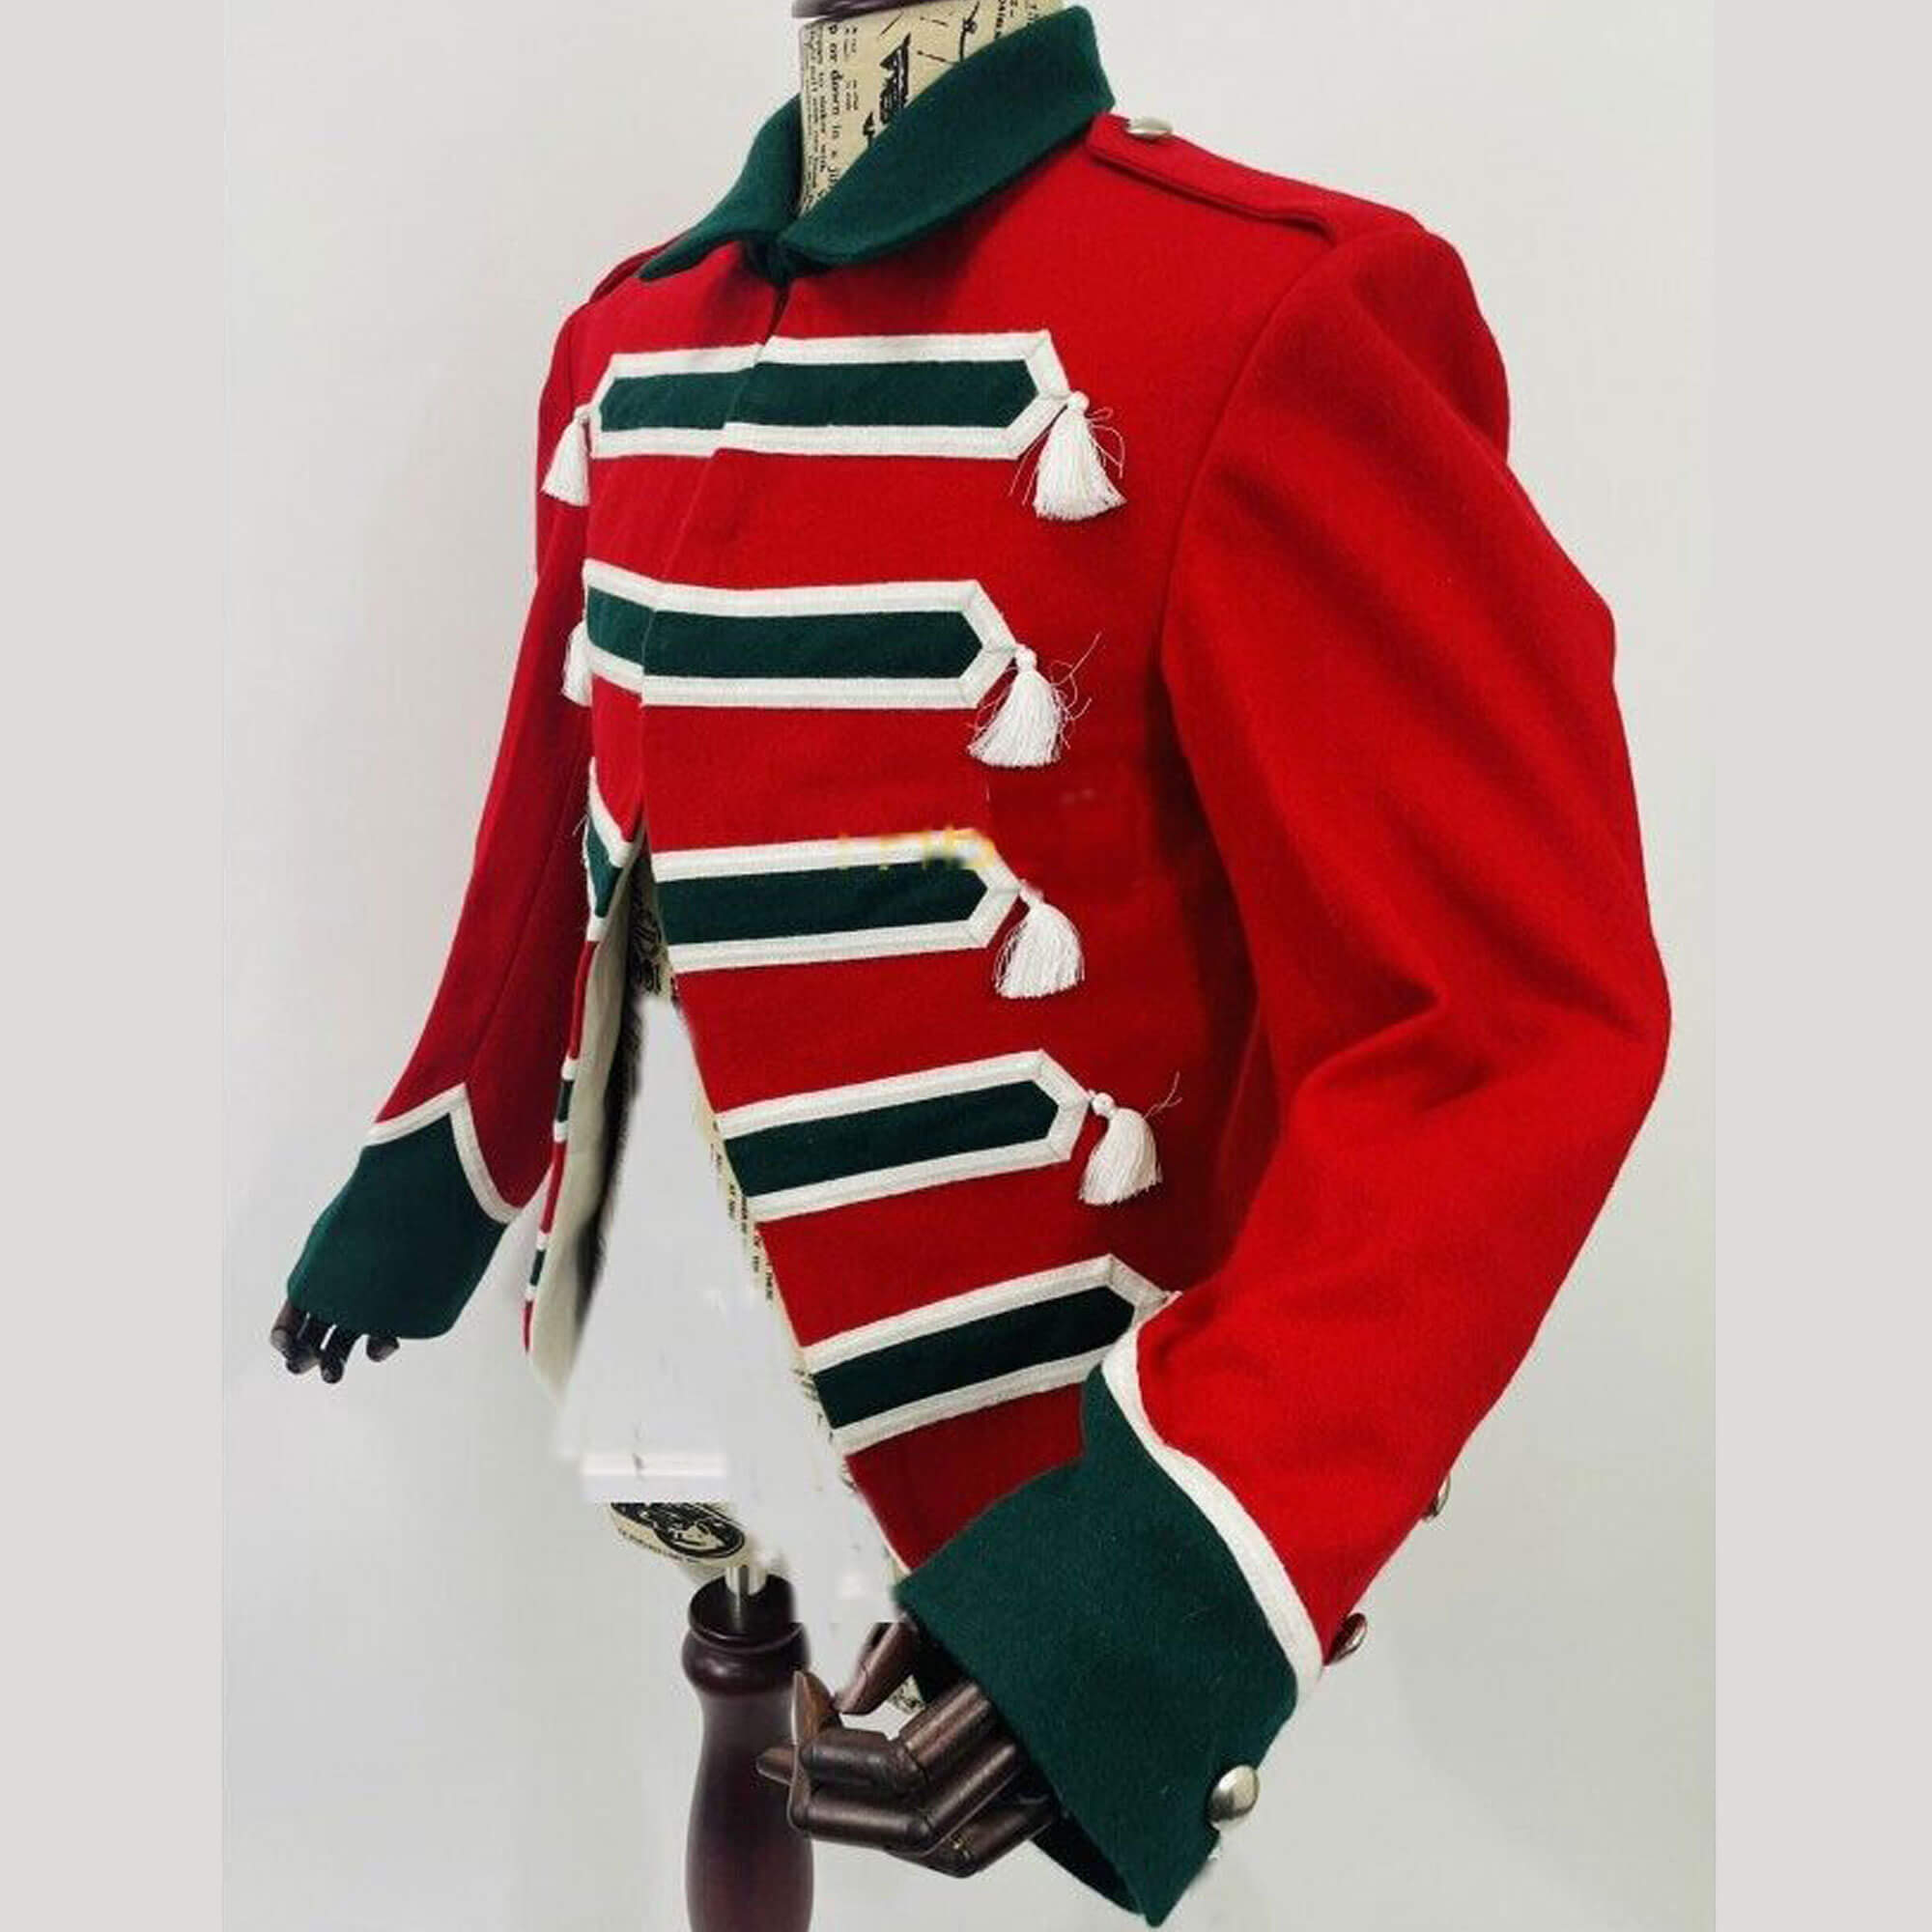 New 1776s 105th Regiment Of Foot Volunteers Of Ireland Red Wool Jacket1